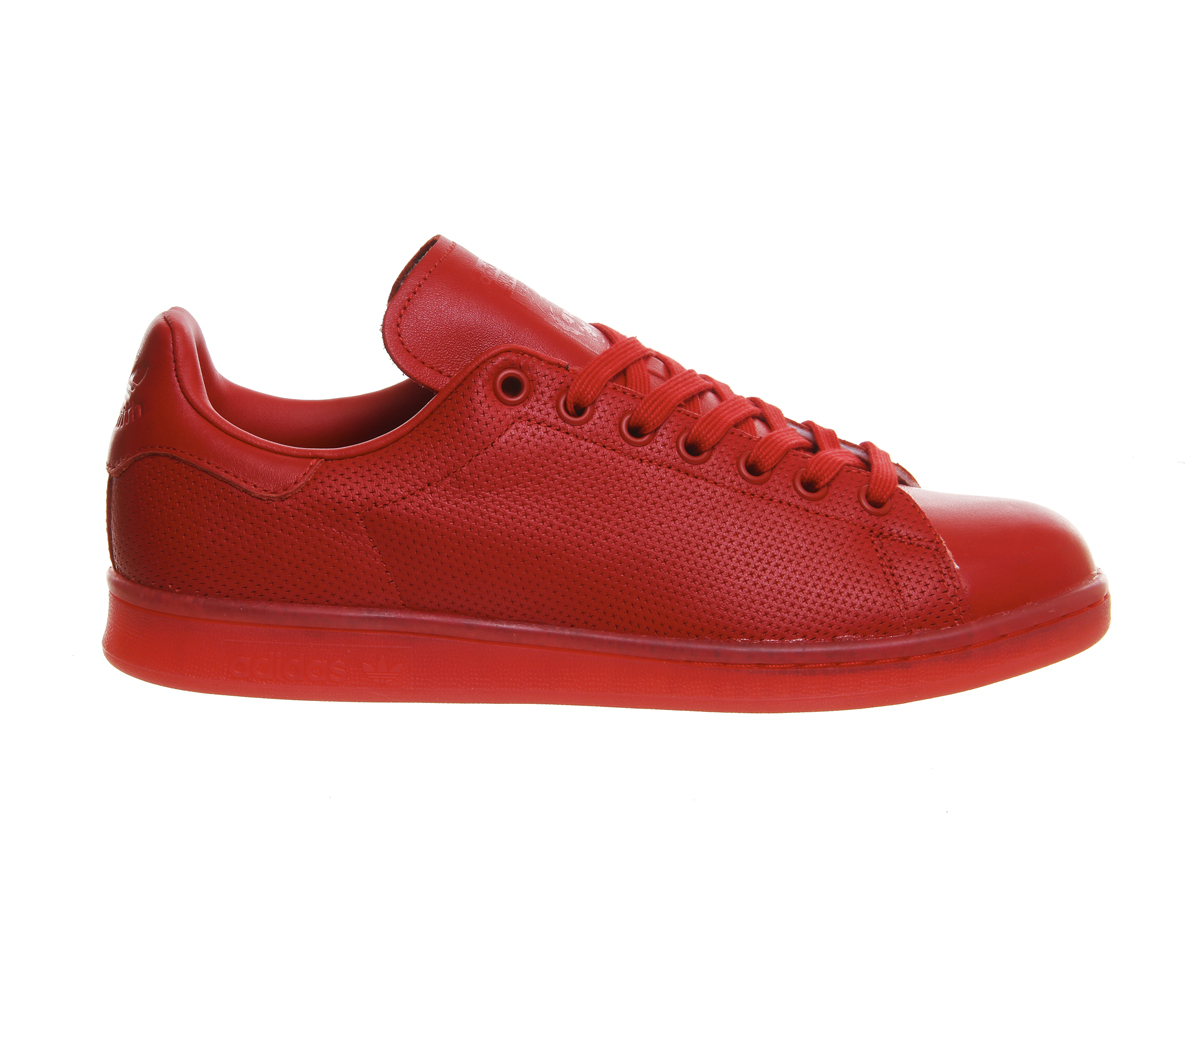 Adidas originals Stan Smith in Red (scarlet) - Save 39% | Lyst